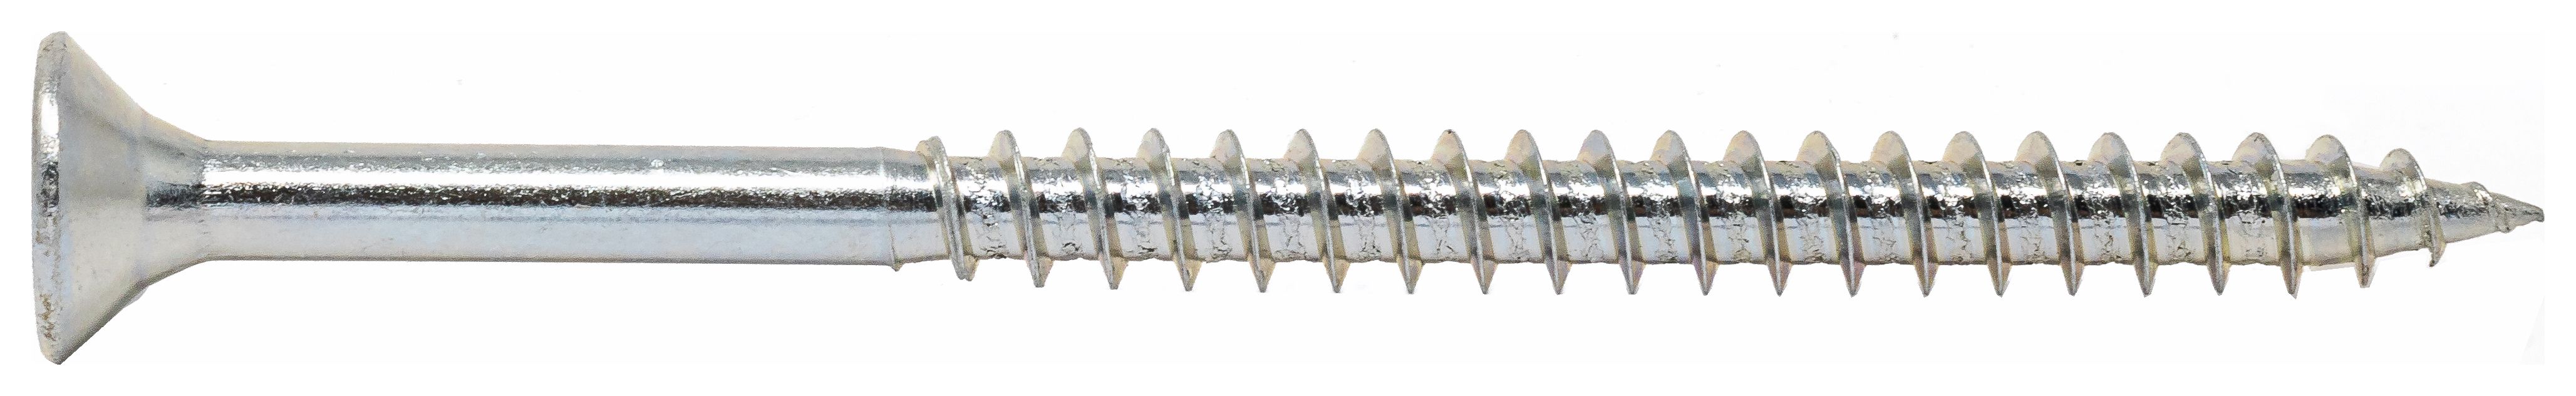 Wickes Single Thread Zinc Plated Screw - 4 X 40mm Pack Of 25